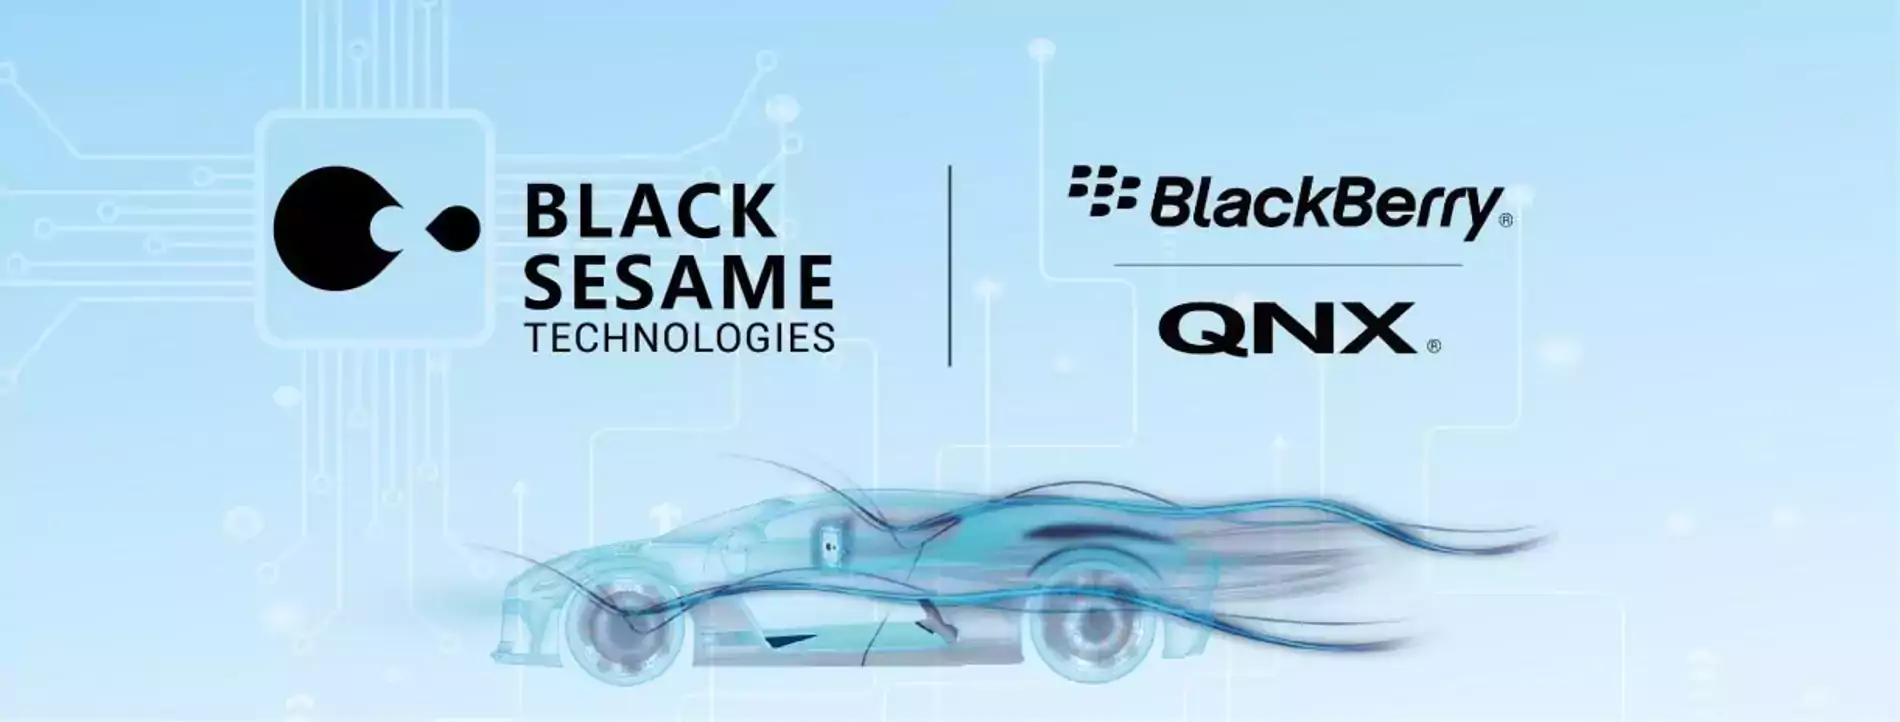 Black Sesame and BlackBerry QNX